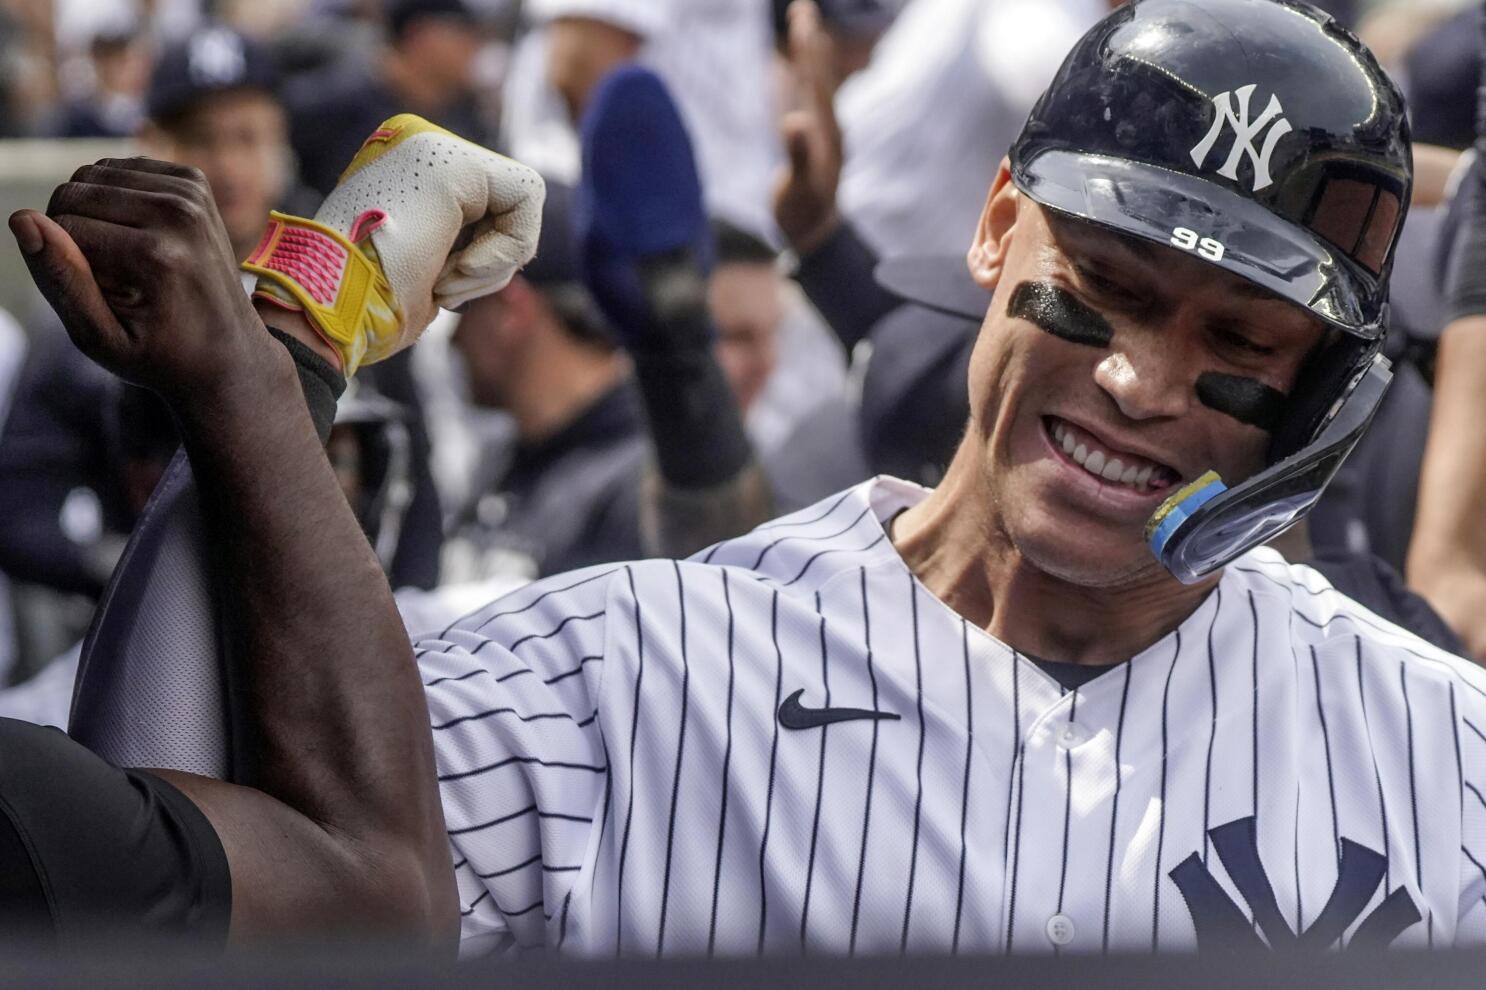 Yankees' Aaron Judge is getting jersey retired 